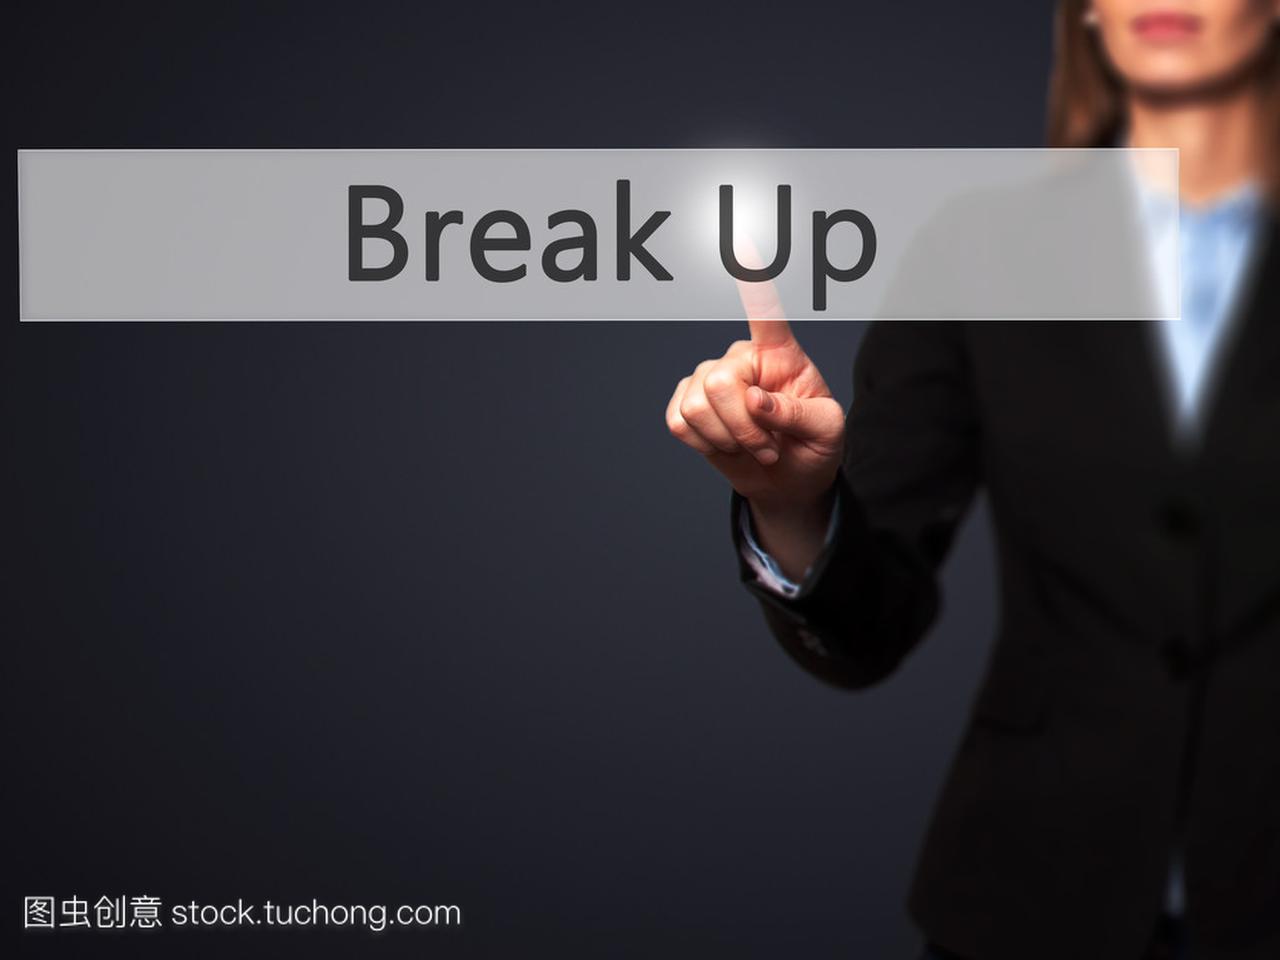 Break Up - Businesswoman pressing 